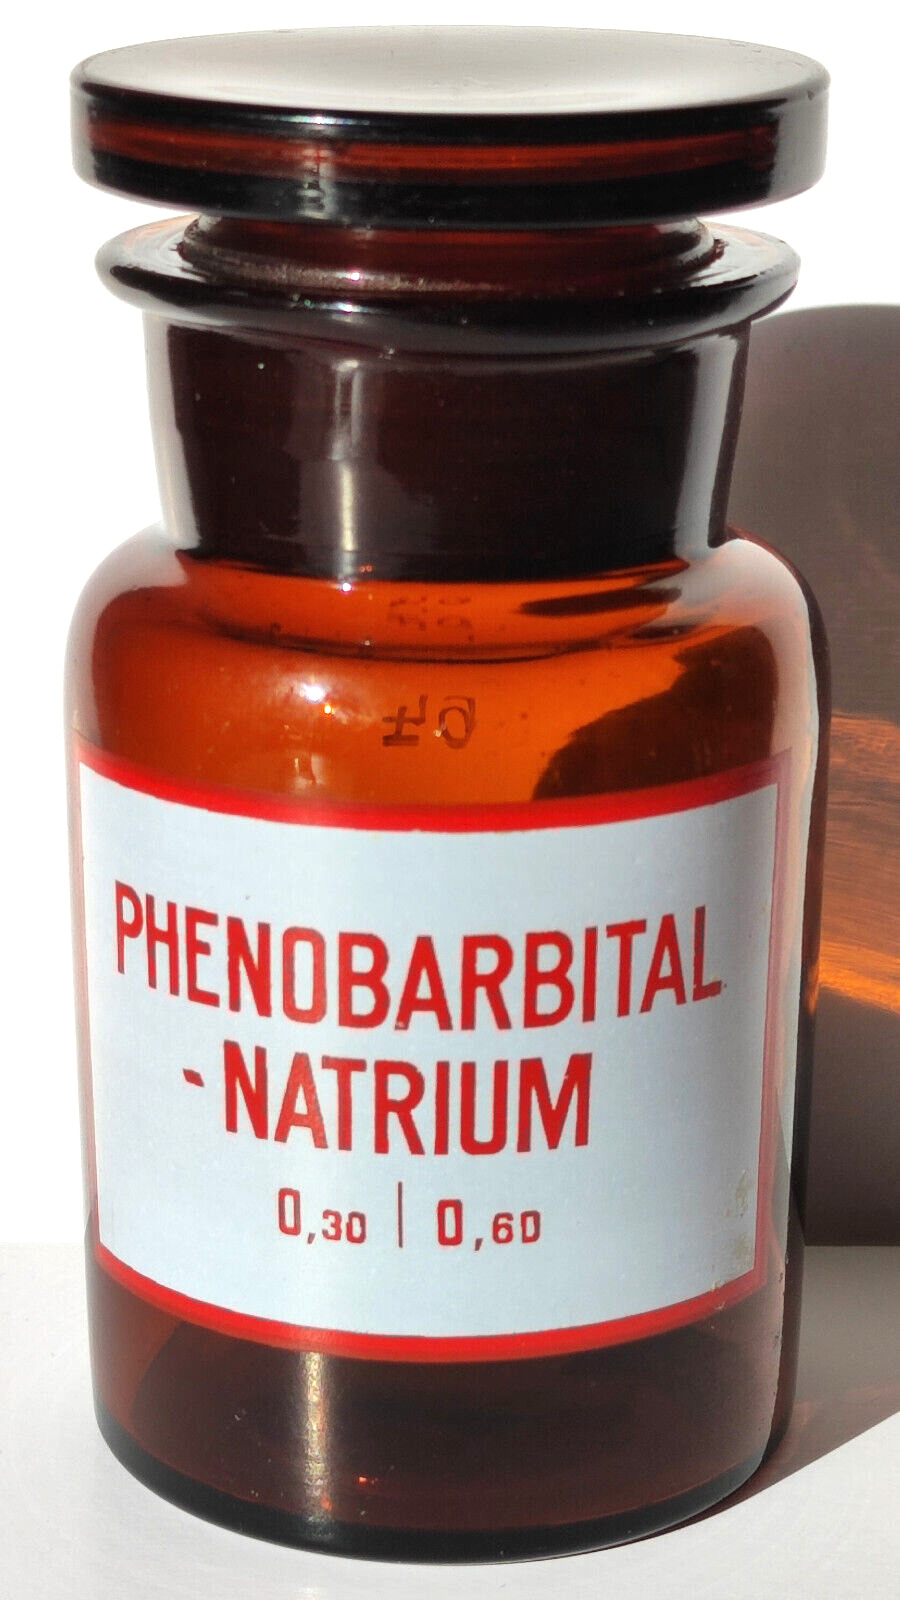 PHENOBARBITAL - NATRIUM, Vintage Glass Apothecary Pharmacy Brown Jar, 100ml, Cap